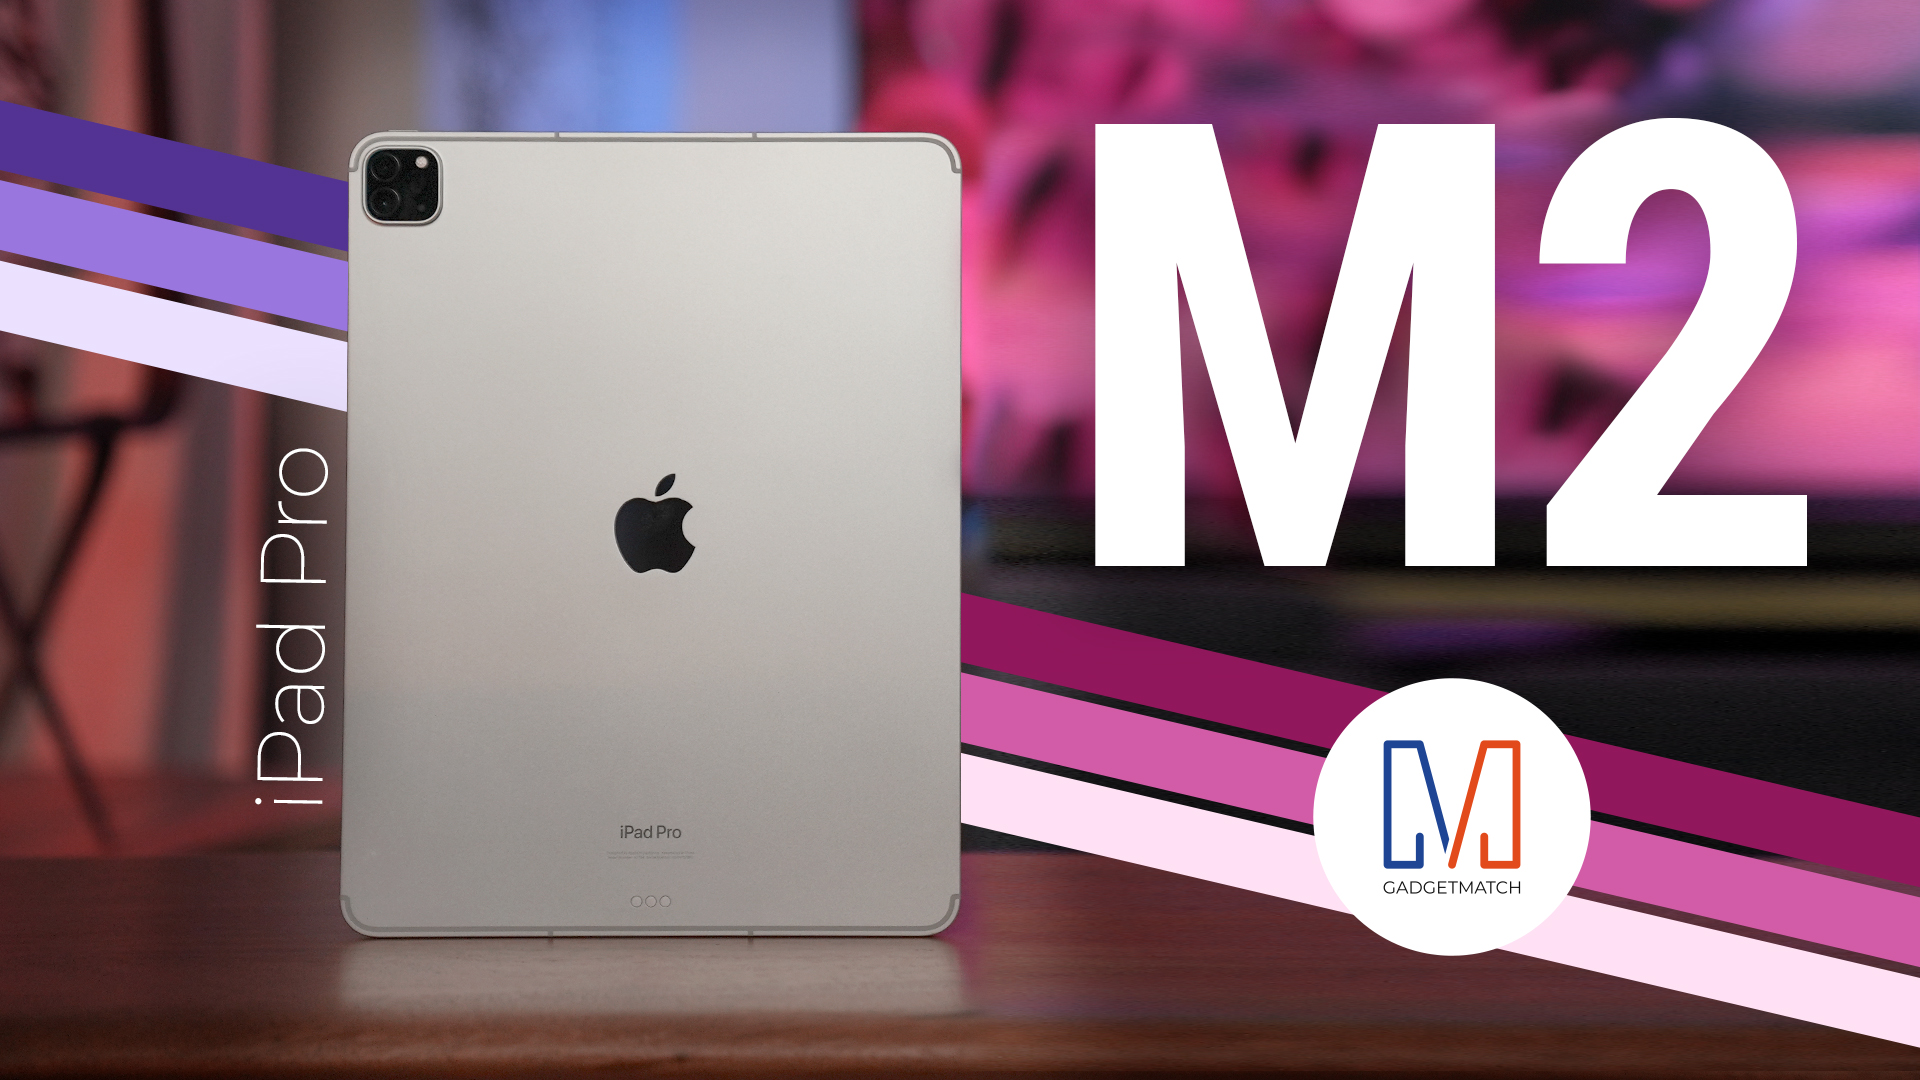 Apple's new M2 iPad Pro arrives October 26